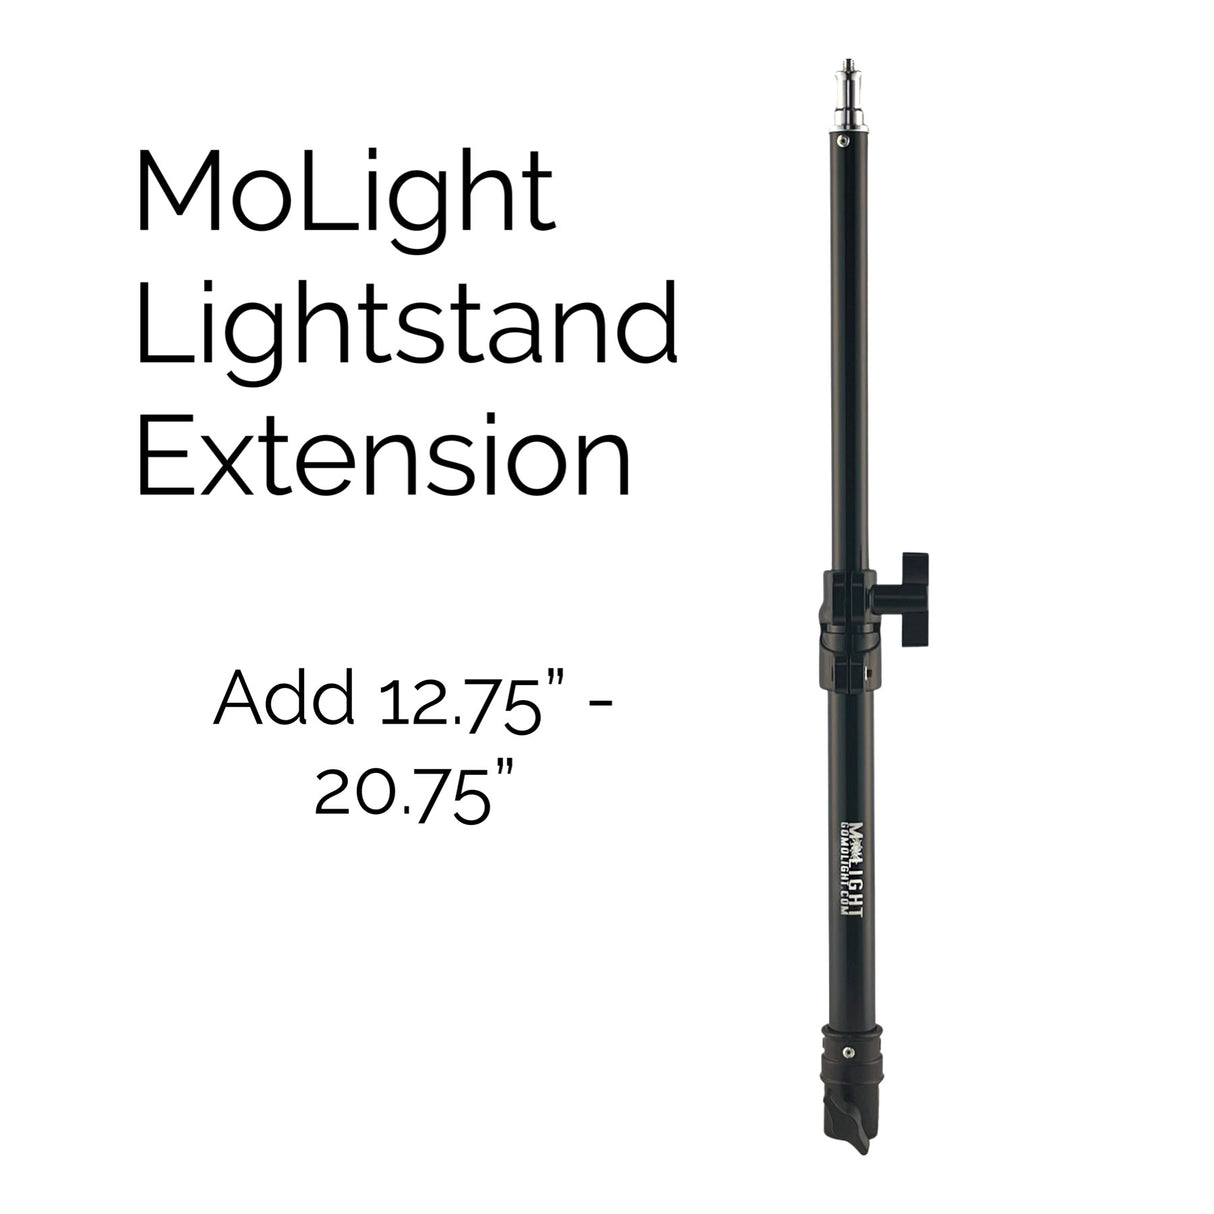 MoLight Lightstand Extension